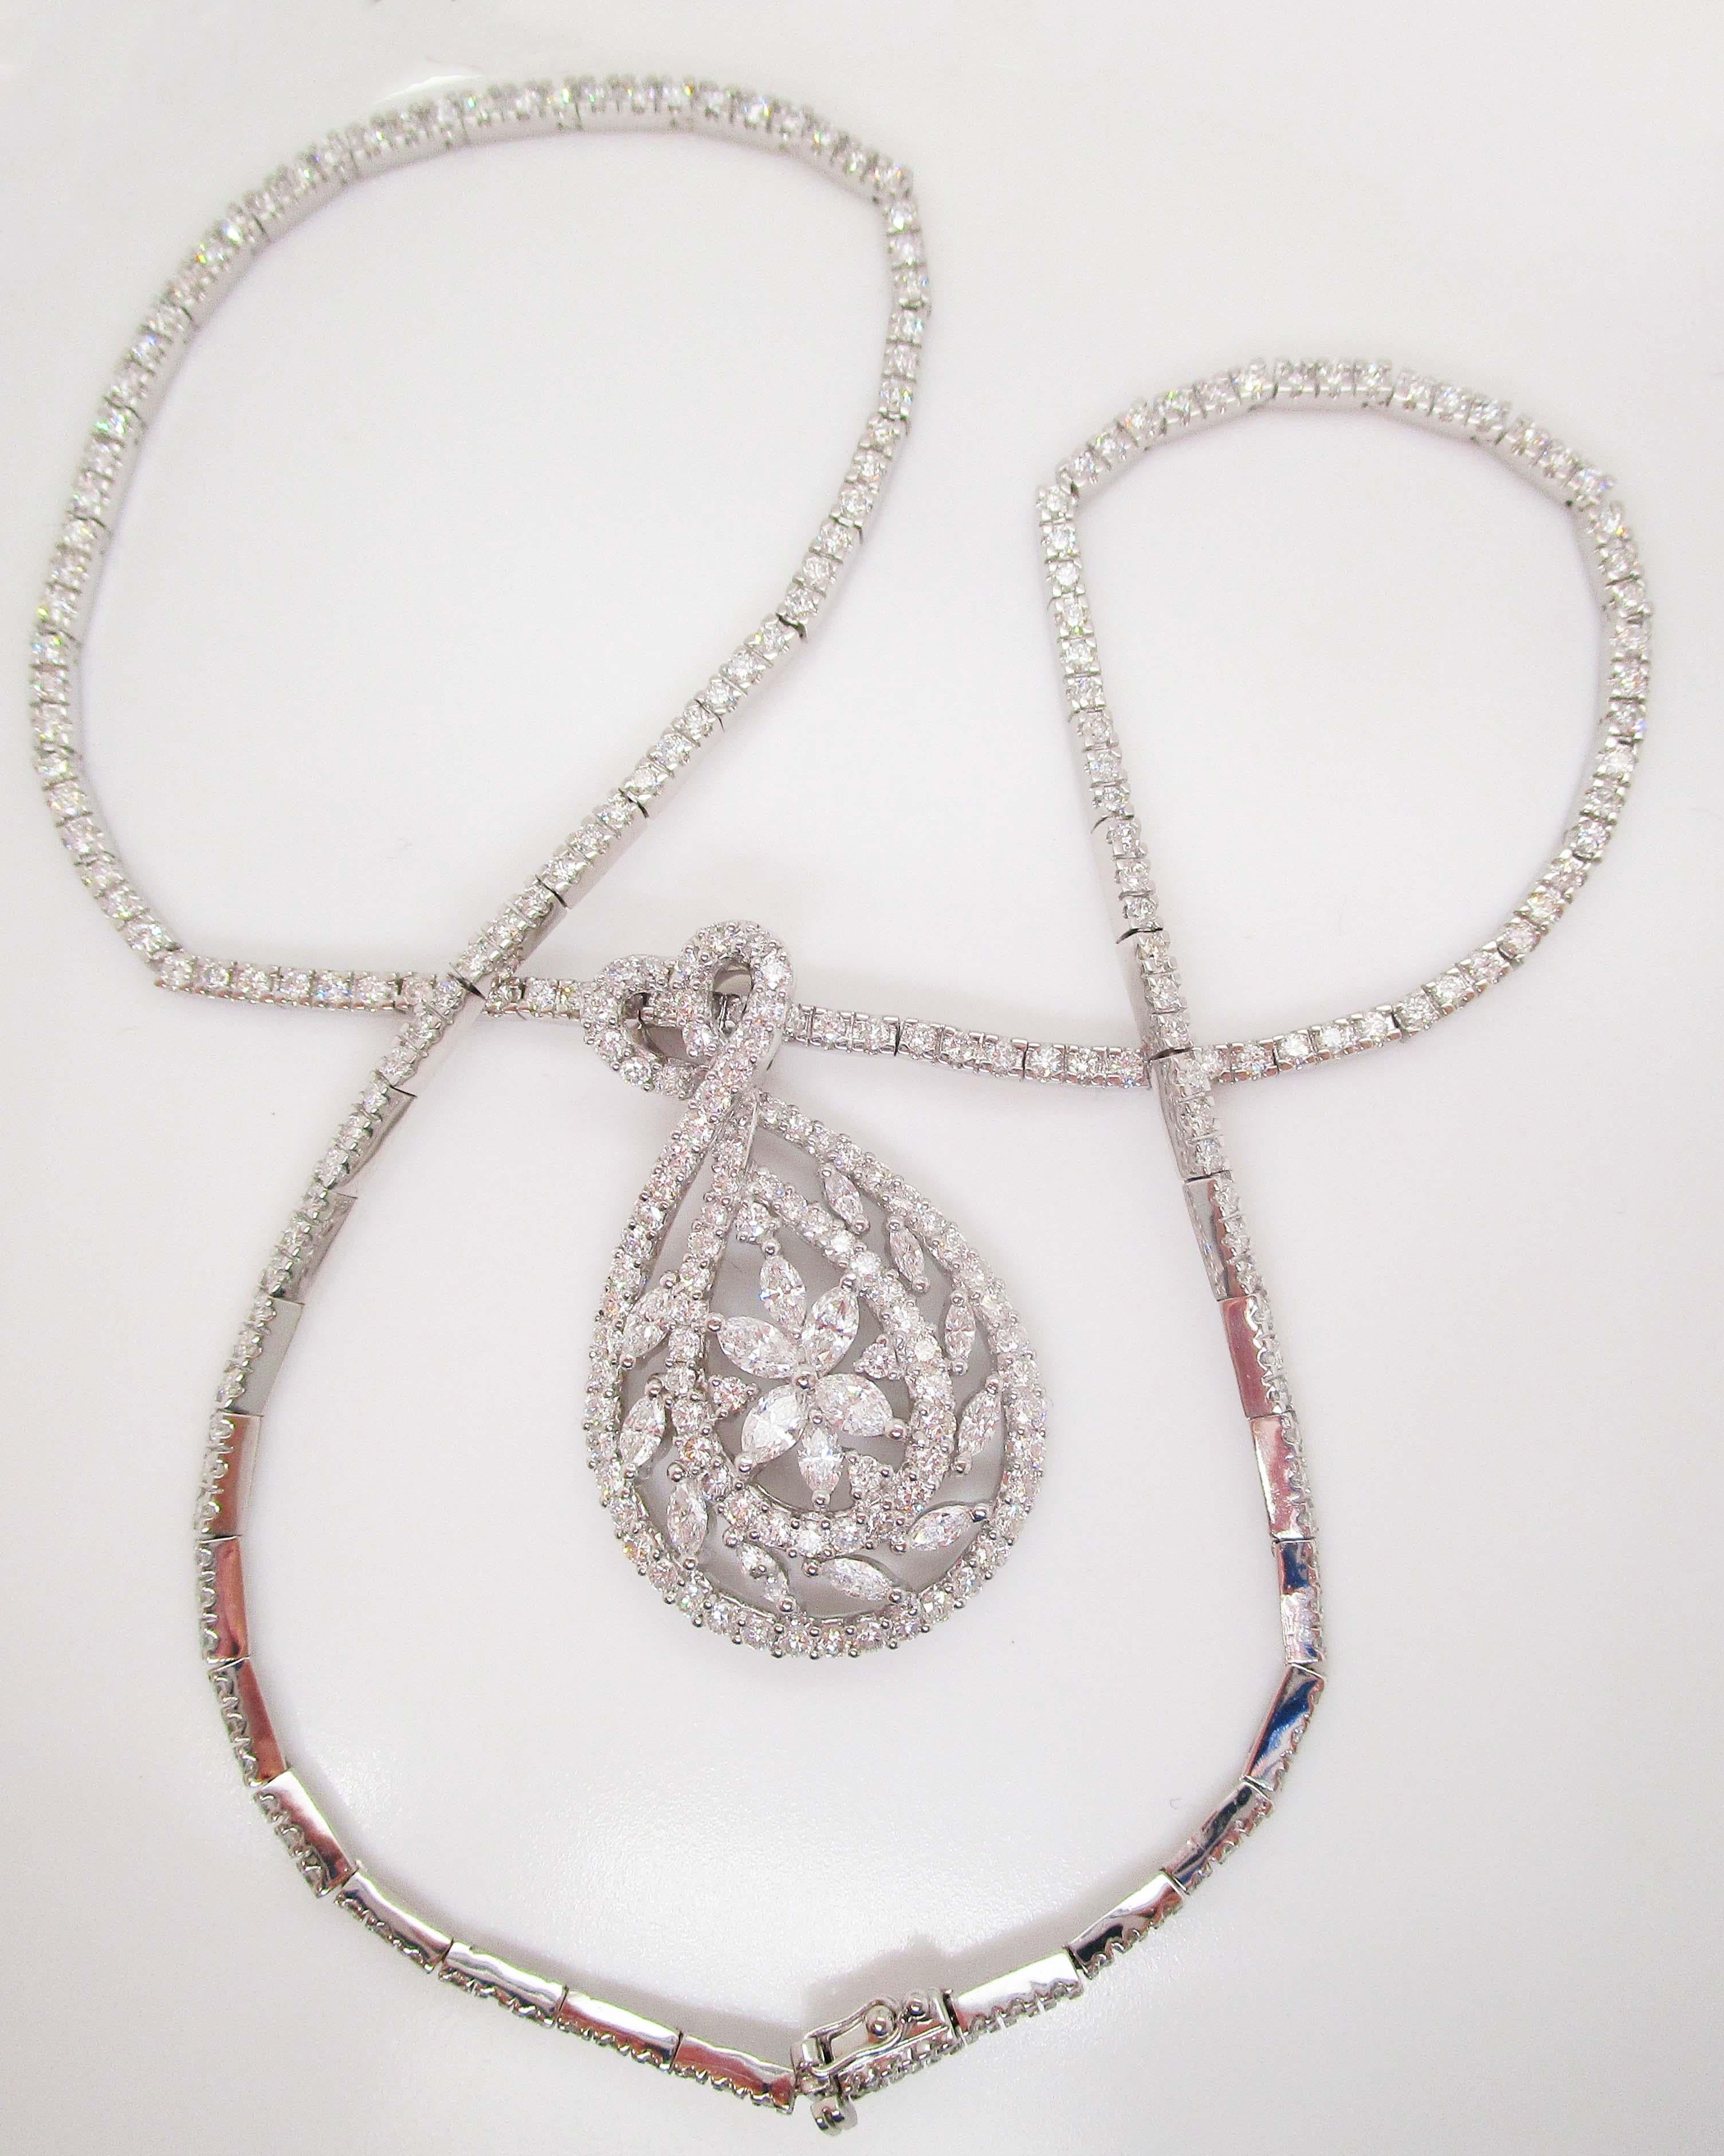 Round Cut 18 Karat Gold Diamond Necklace with Removable 18 Karat Diamond Teardrop Pendant For Sale